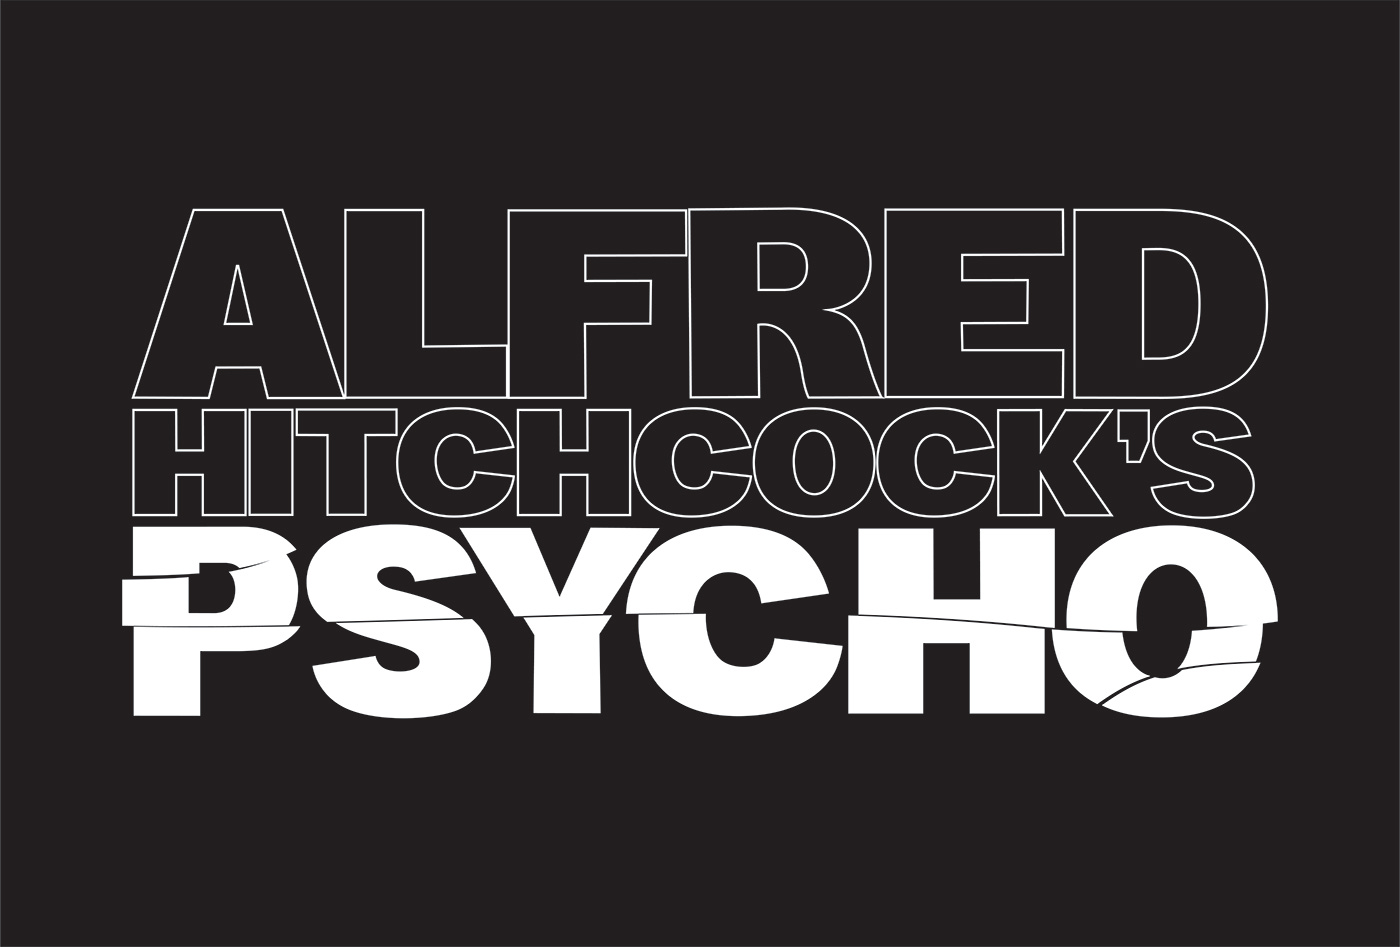 Psycho Font